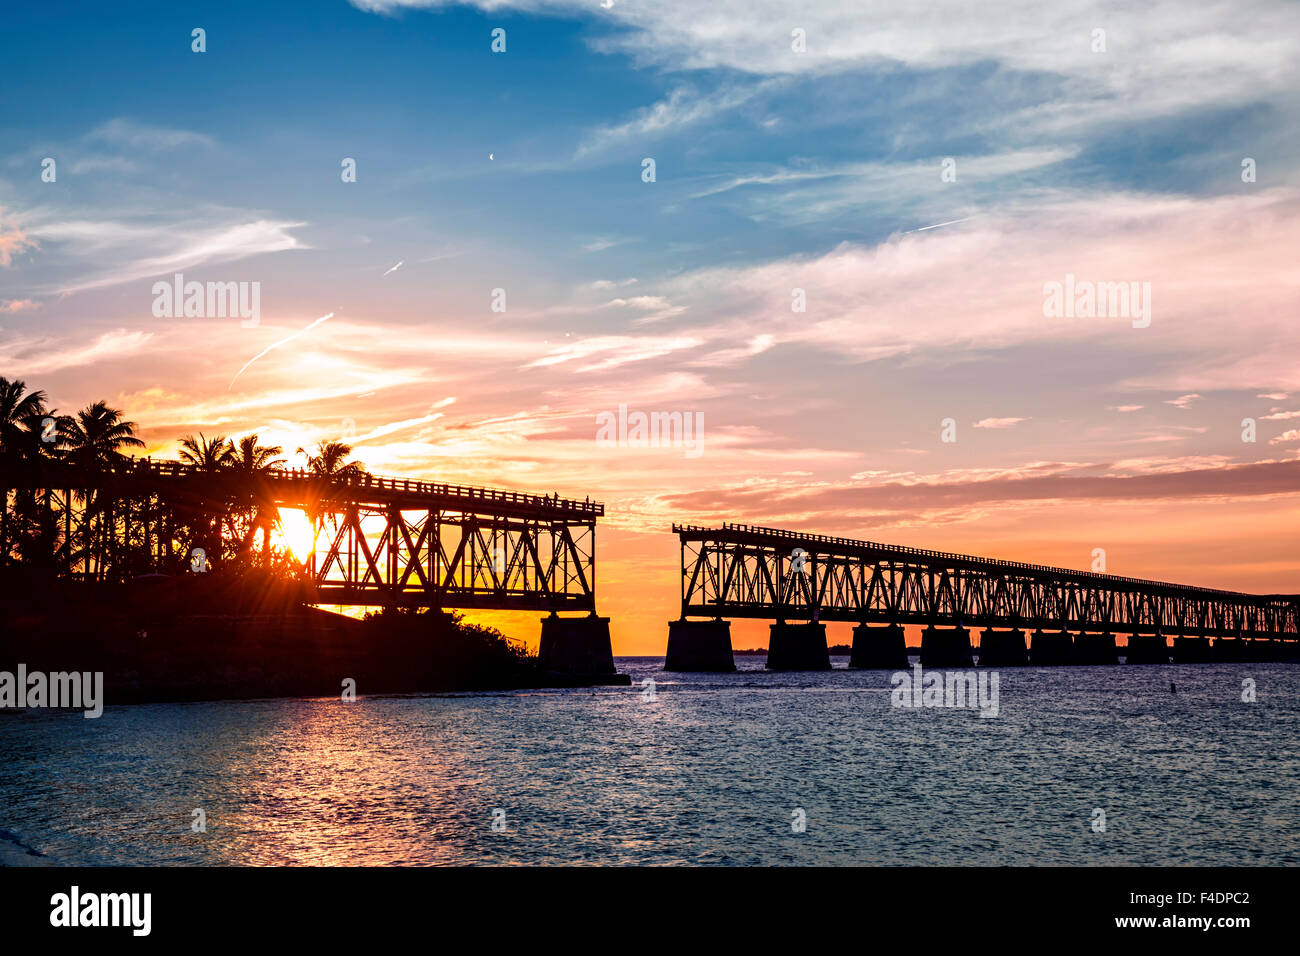 Sunset view of historic Rail Bridge at Bahia Honda state park in Florida Keys, USA. Stock Photo